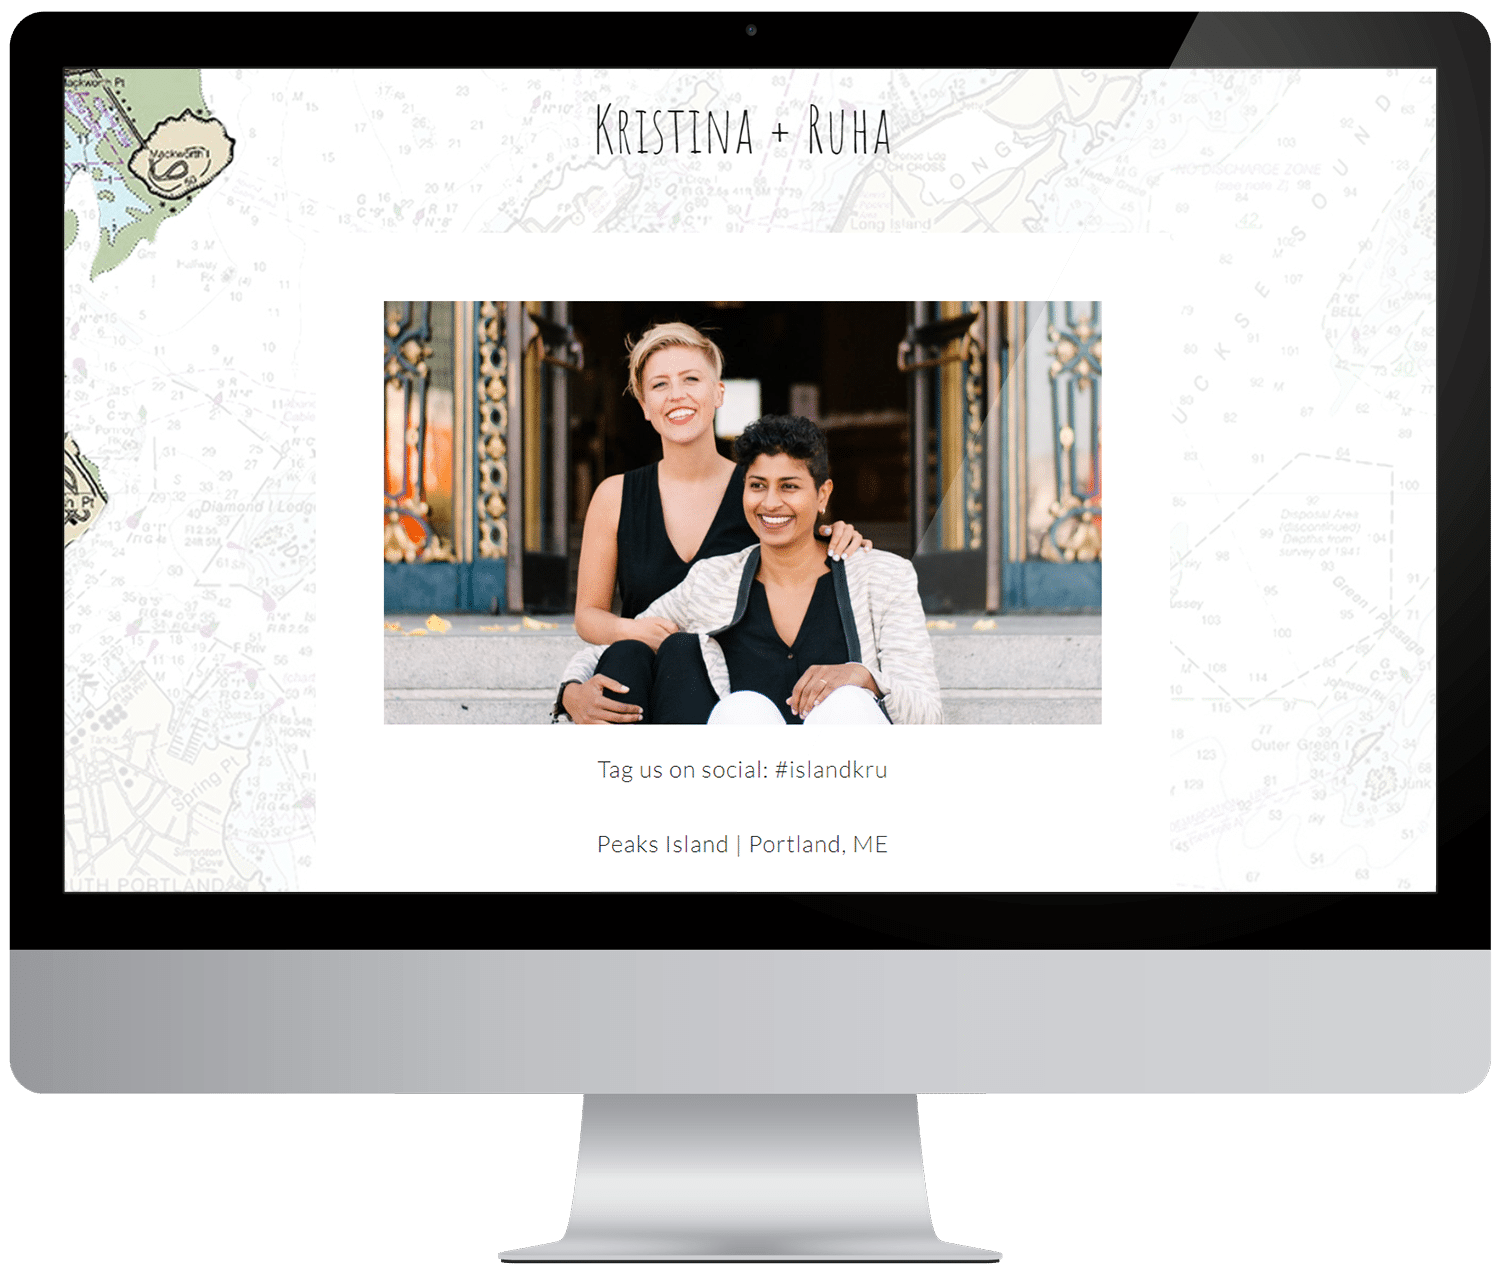 A Squarespace wedding website for a couple, as shown through a Computer monitor